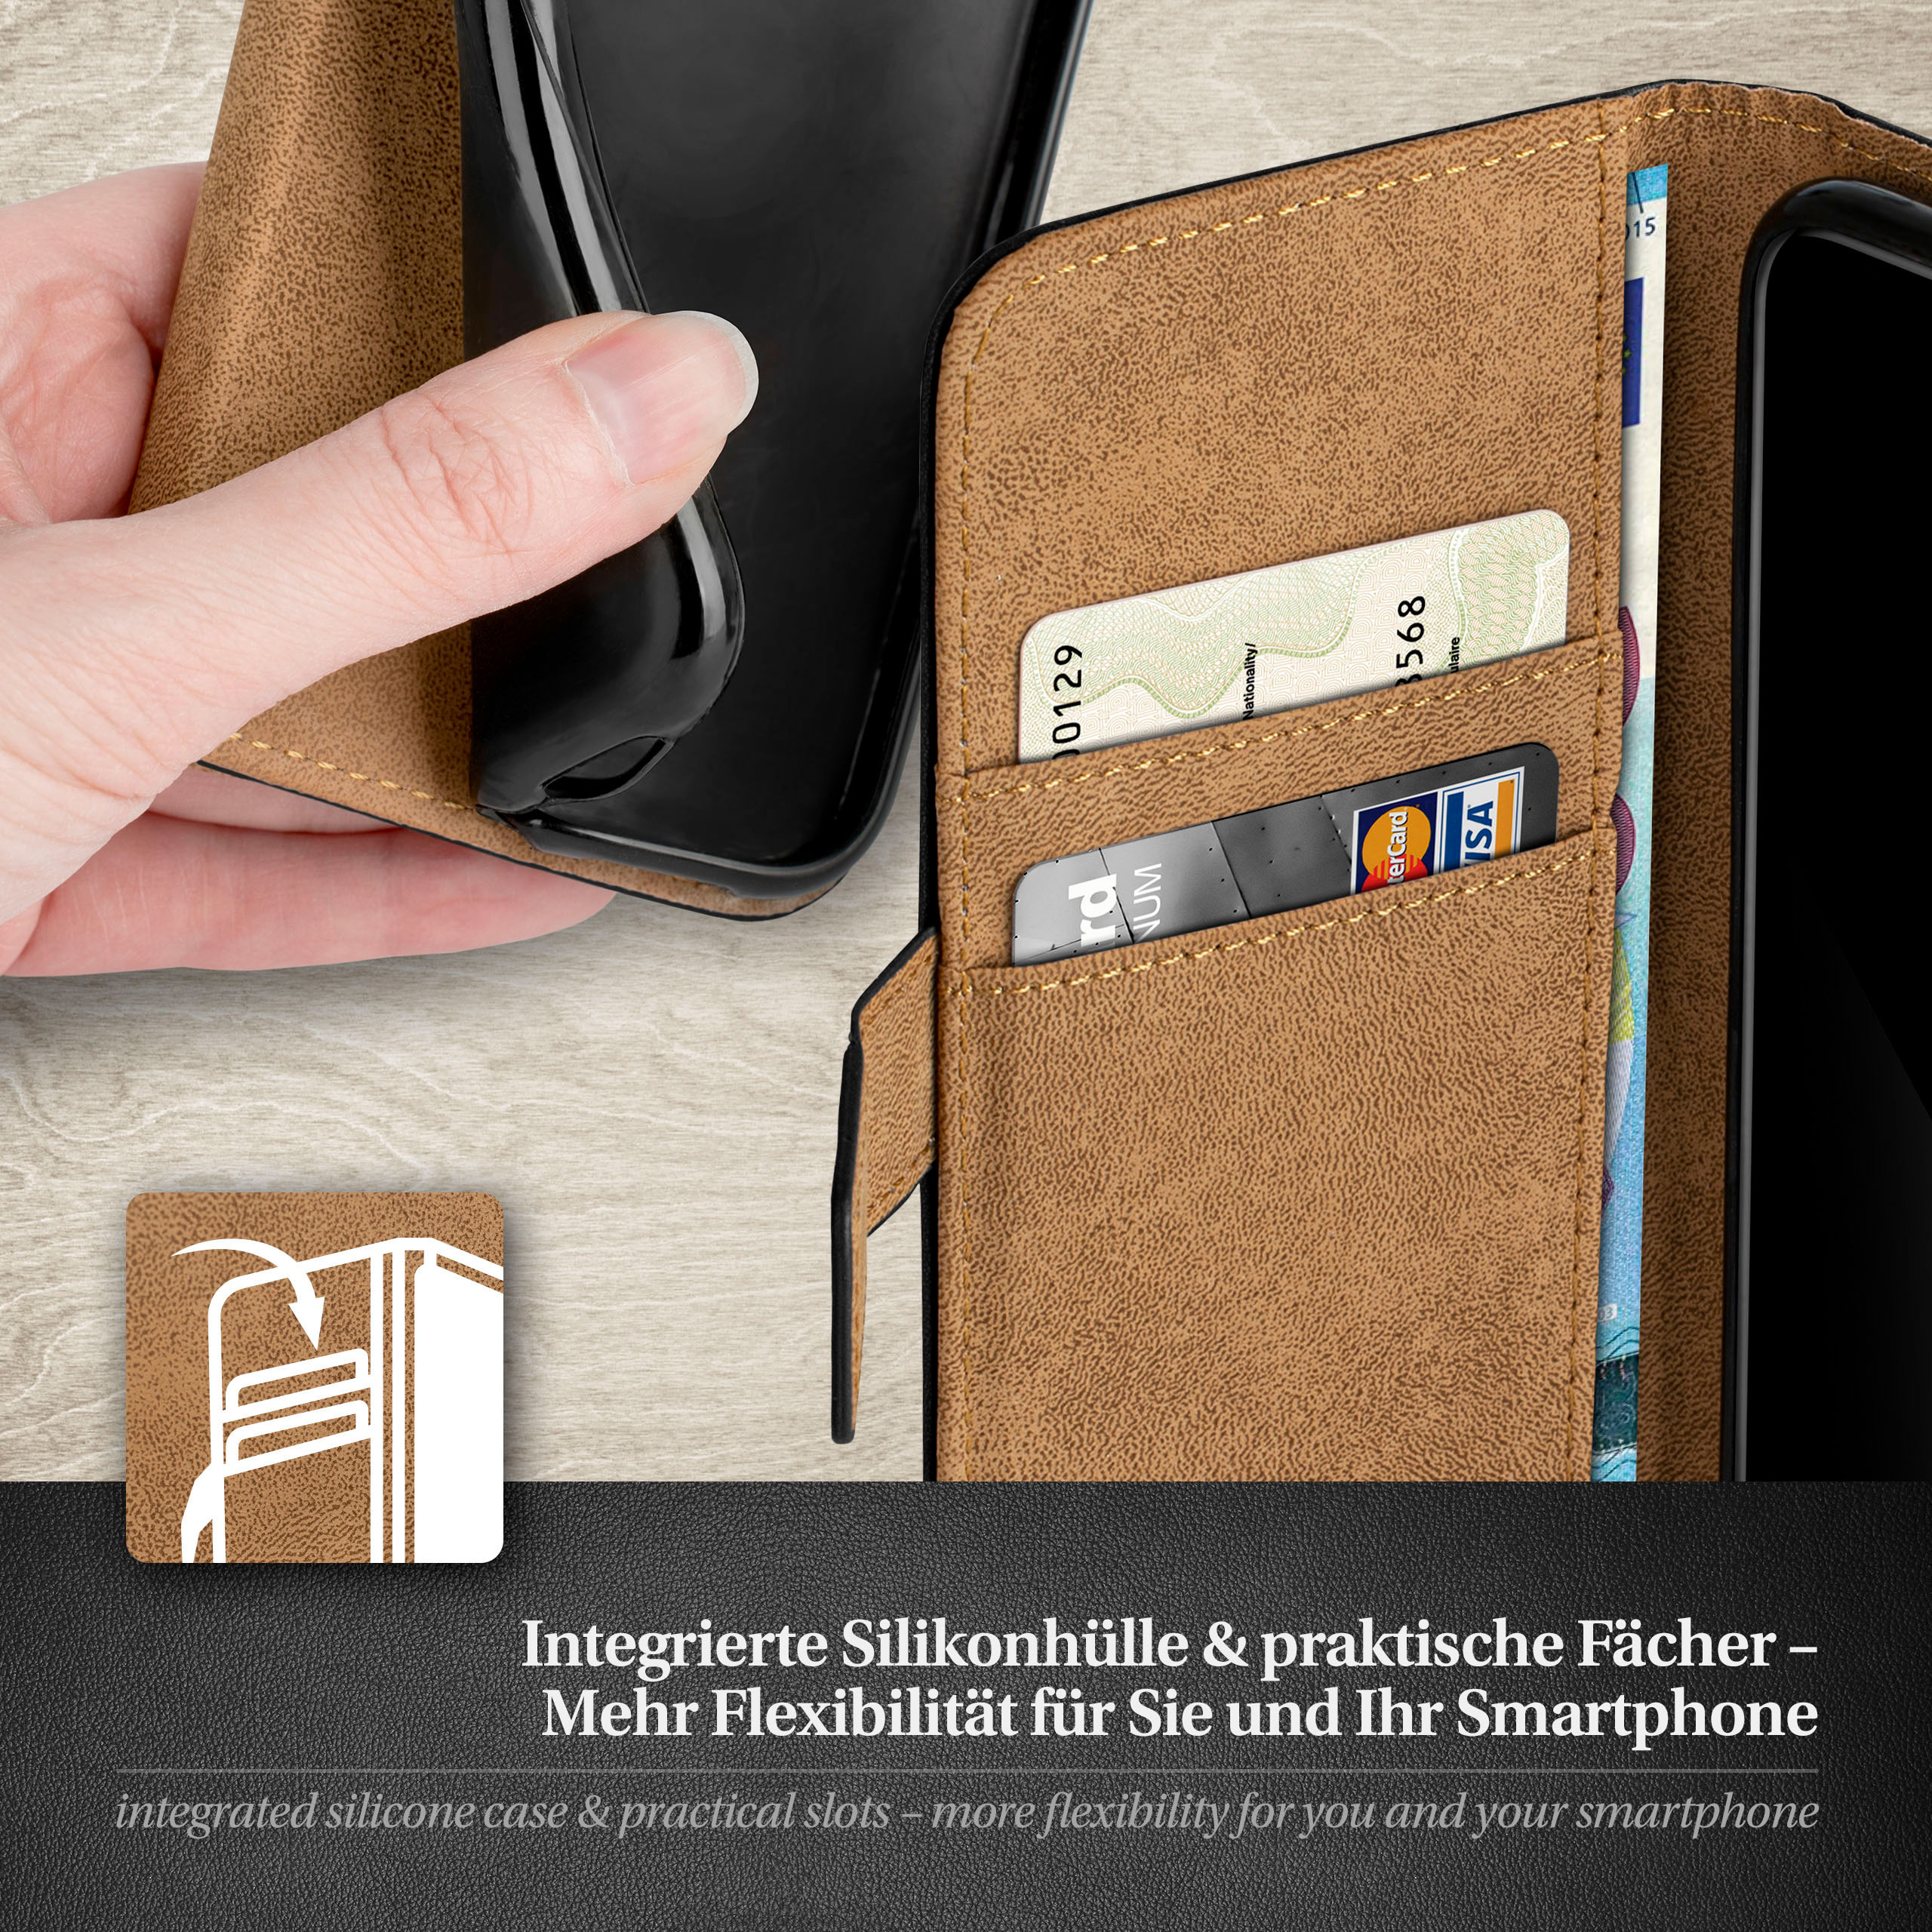 Bookcover, Samsung, S5 MOEX Galaxy Case, Mini, Book Deep-Black